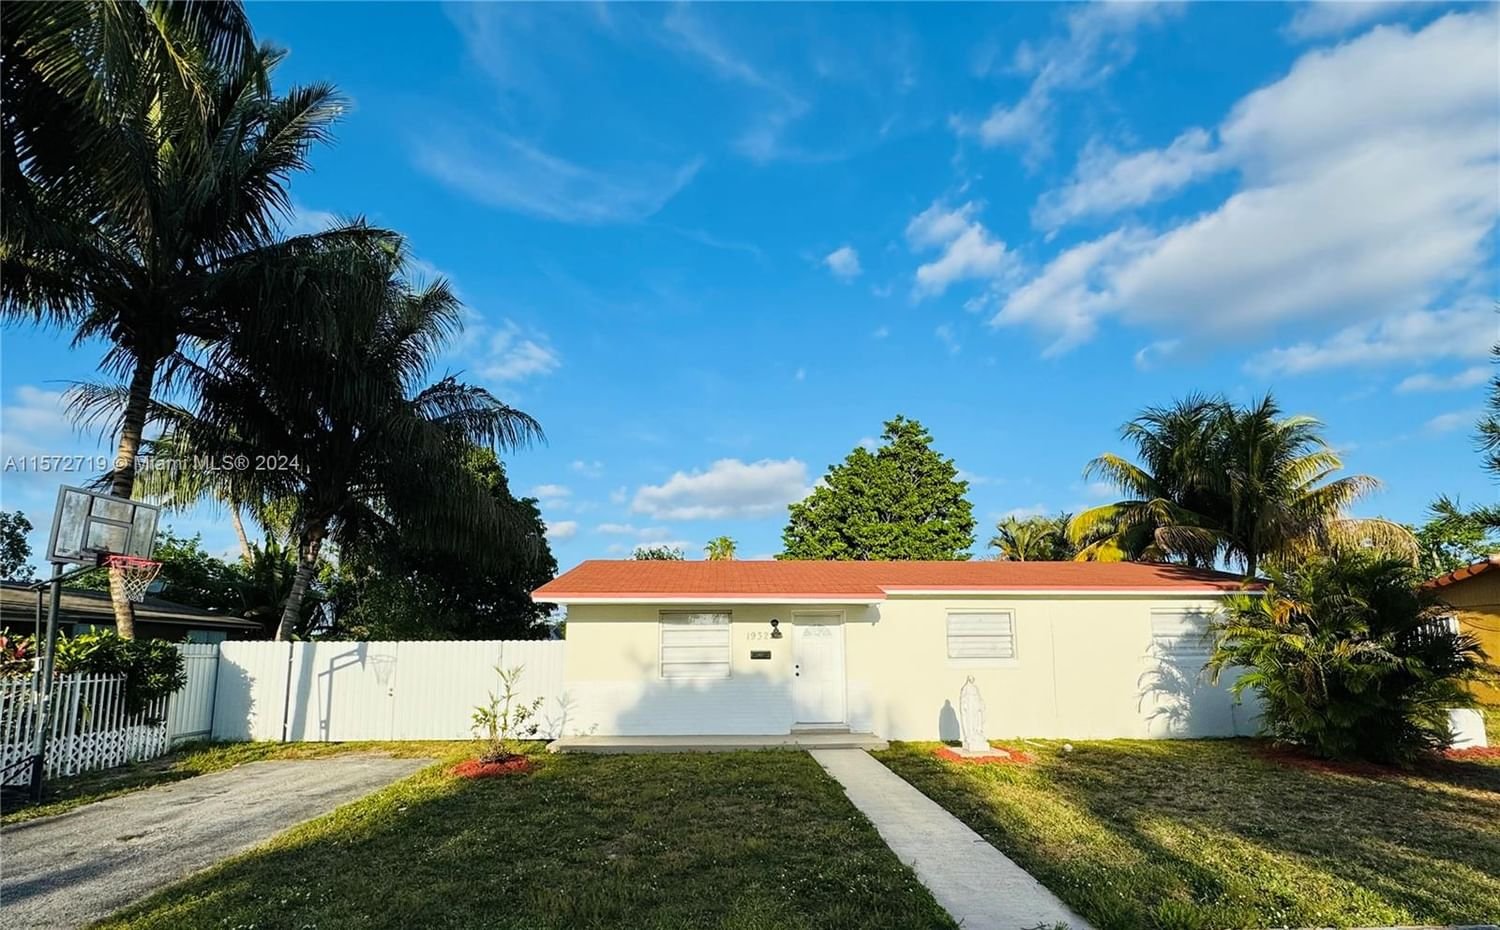 Real estate property located at 19323 42nd Ct, Miami-Dade County, CAROL CITY GARDENS, Miami Gardens, FL